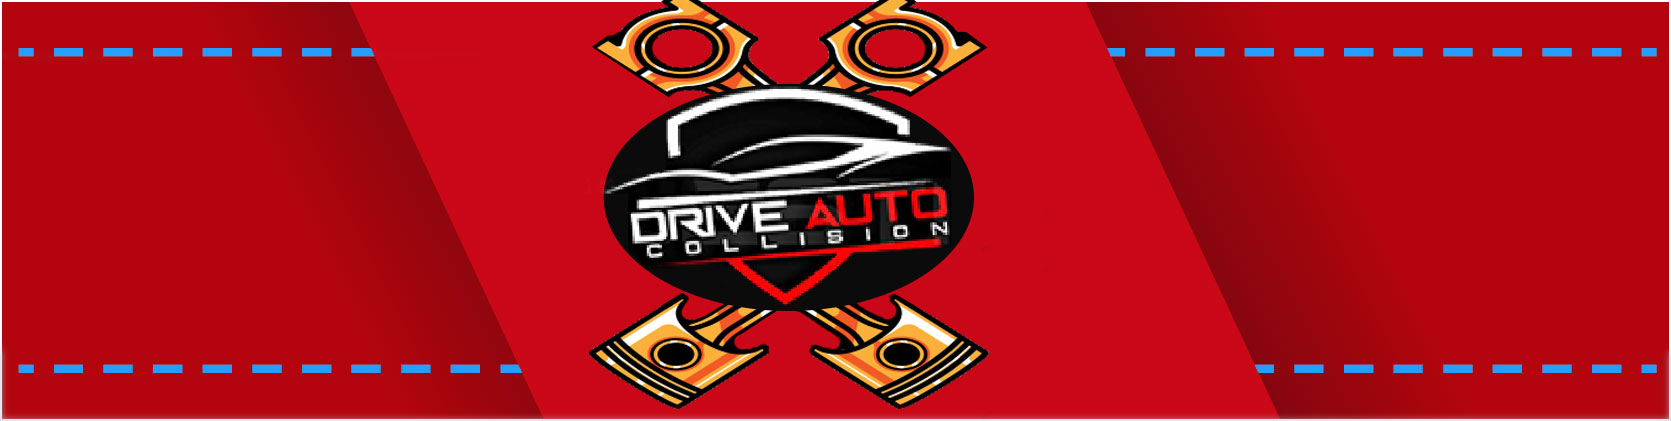 Drive-Auto-Collision_Iconss-03